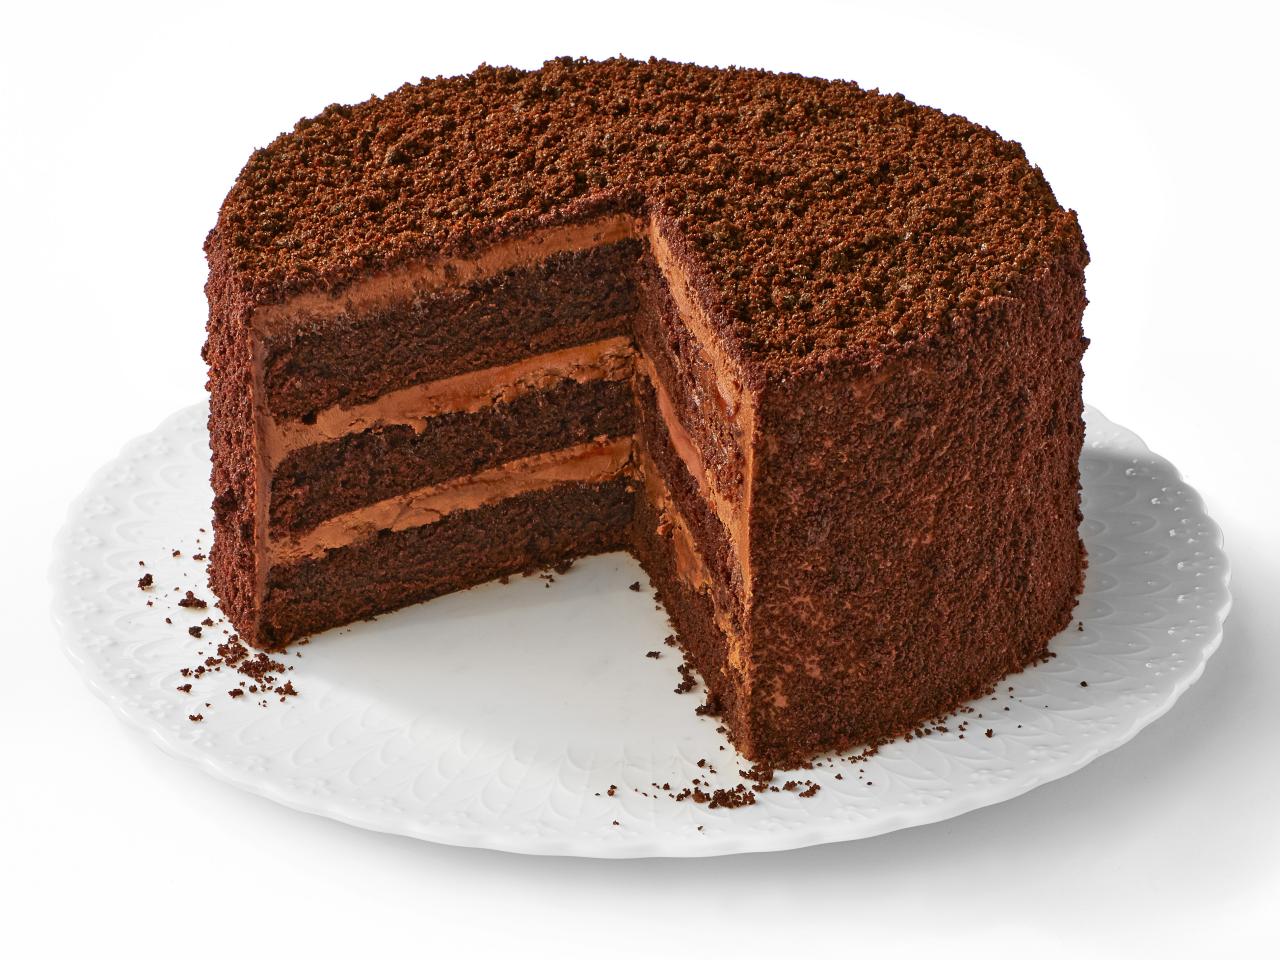 Chocolate Blackout Cake